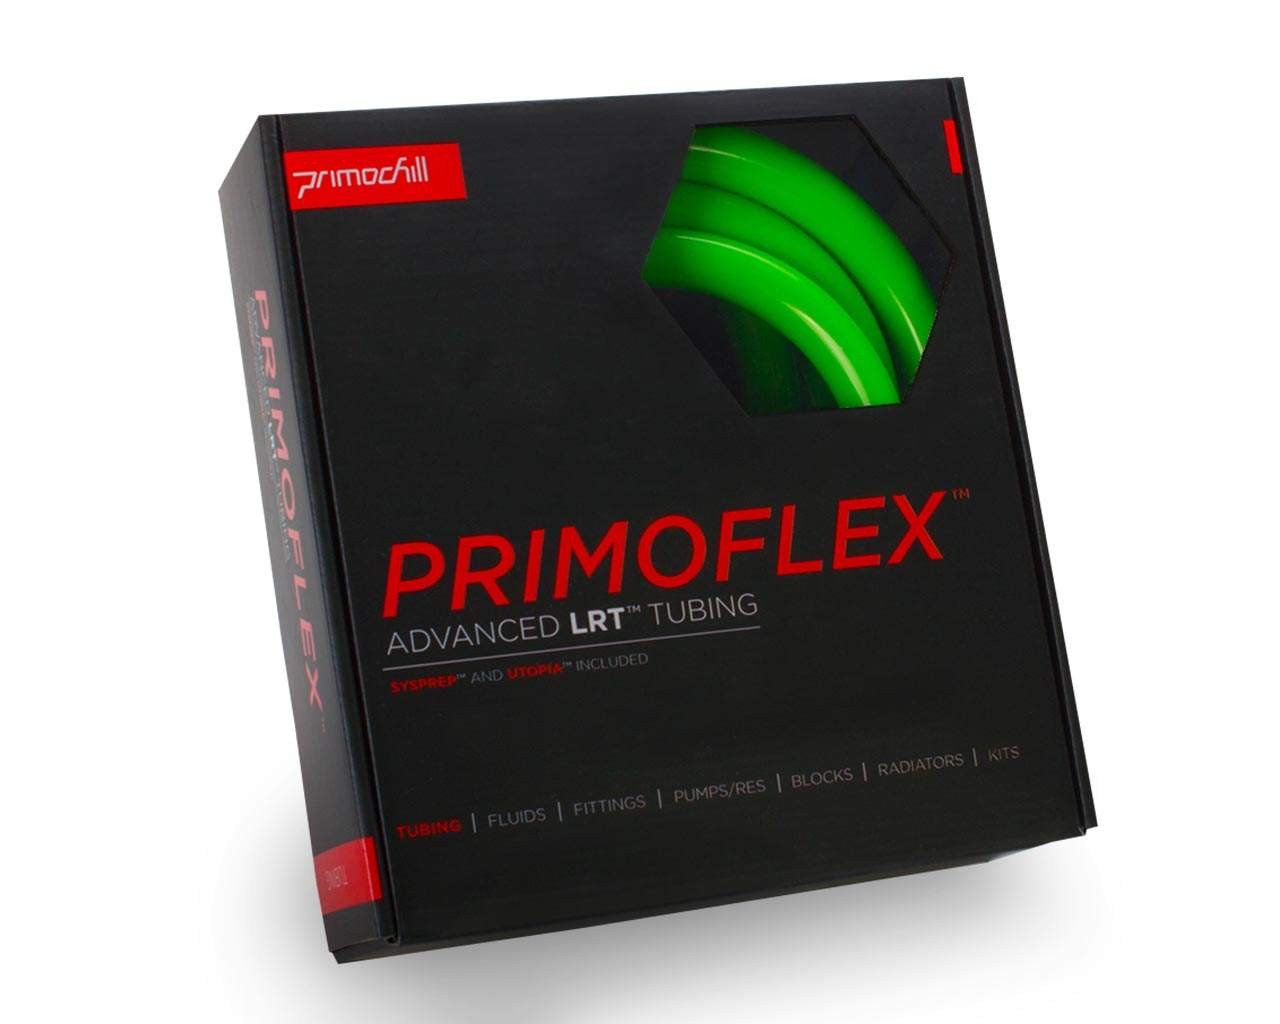 PrimoFlex Advanced LRT Soft Flexible Tubing -3/8in.ID x 5/8in.OD, 10 feet - PrimoChill - KEEPING IT COOL